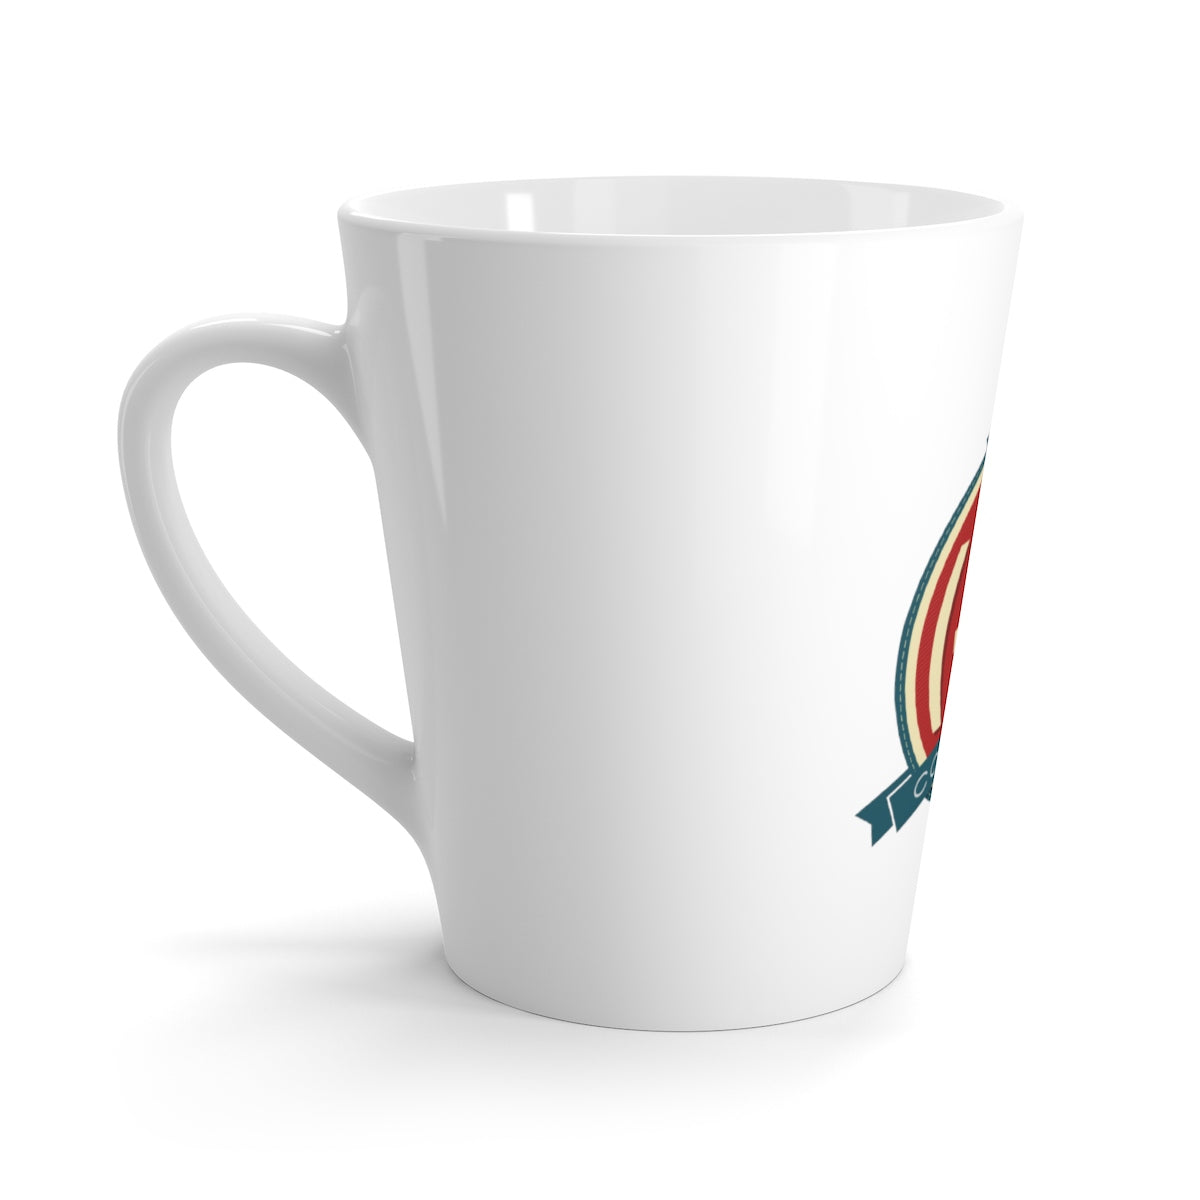 Republican Coffee Latte mug